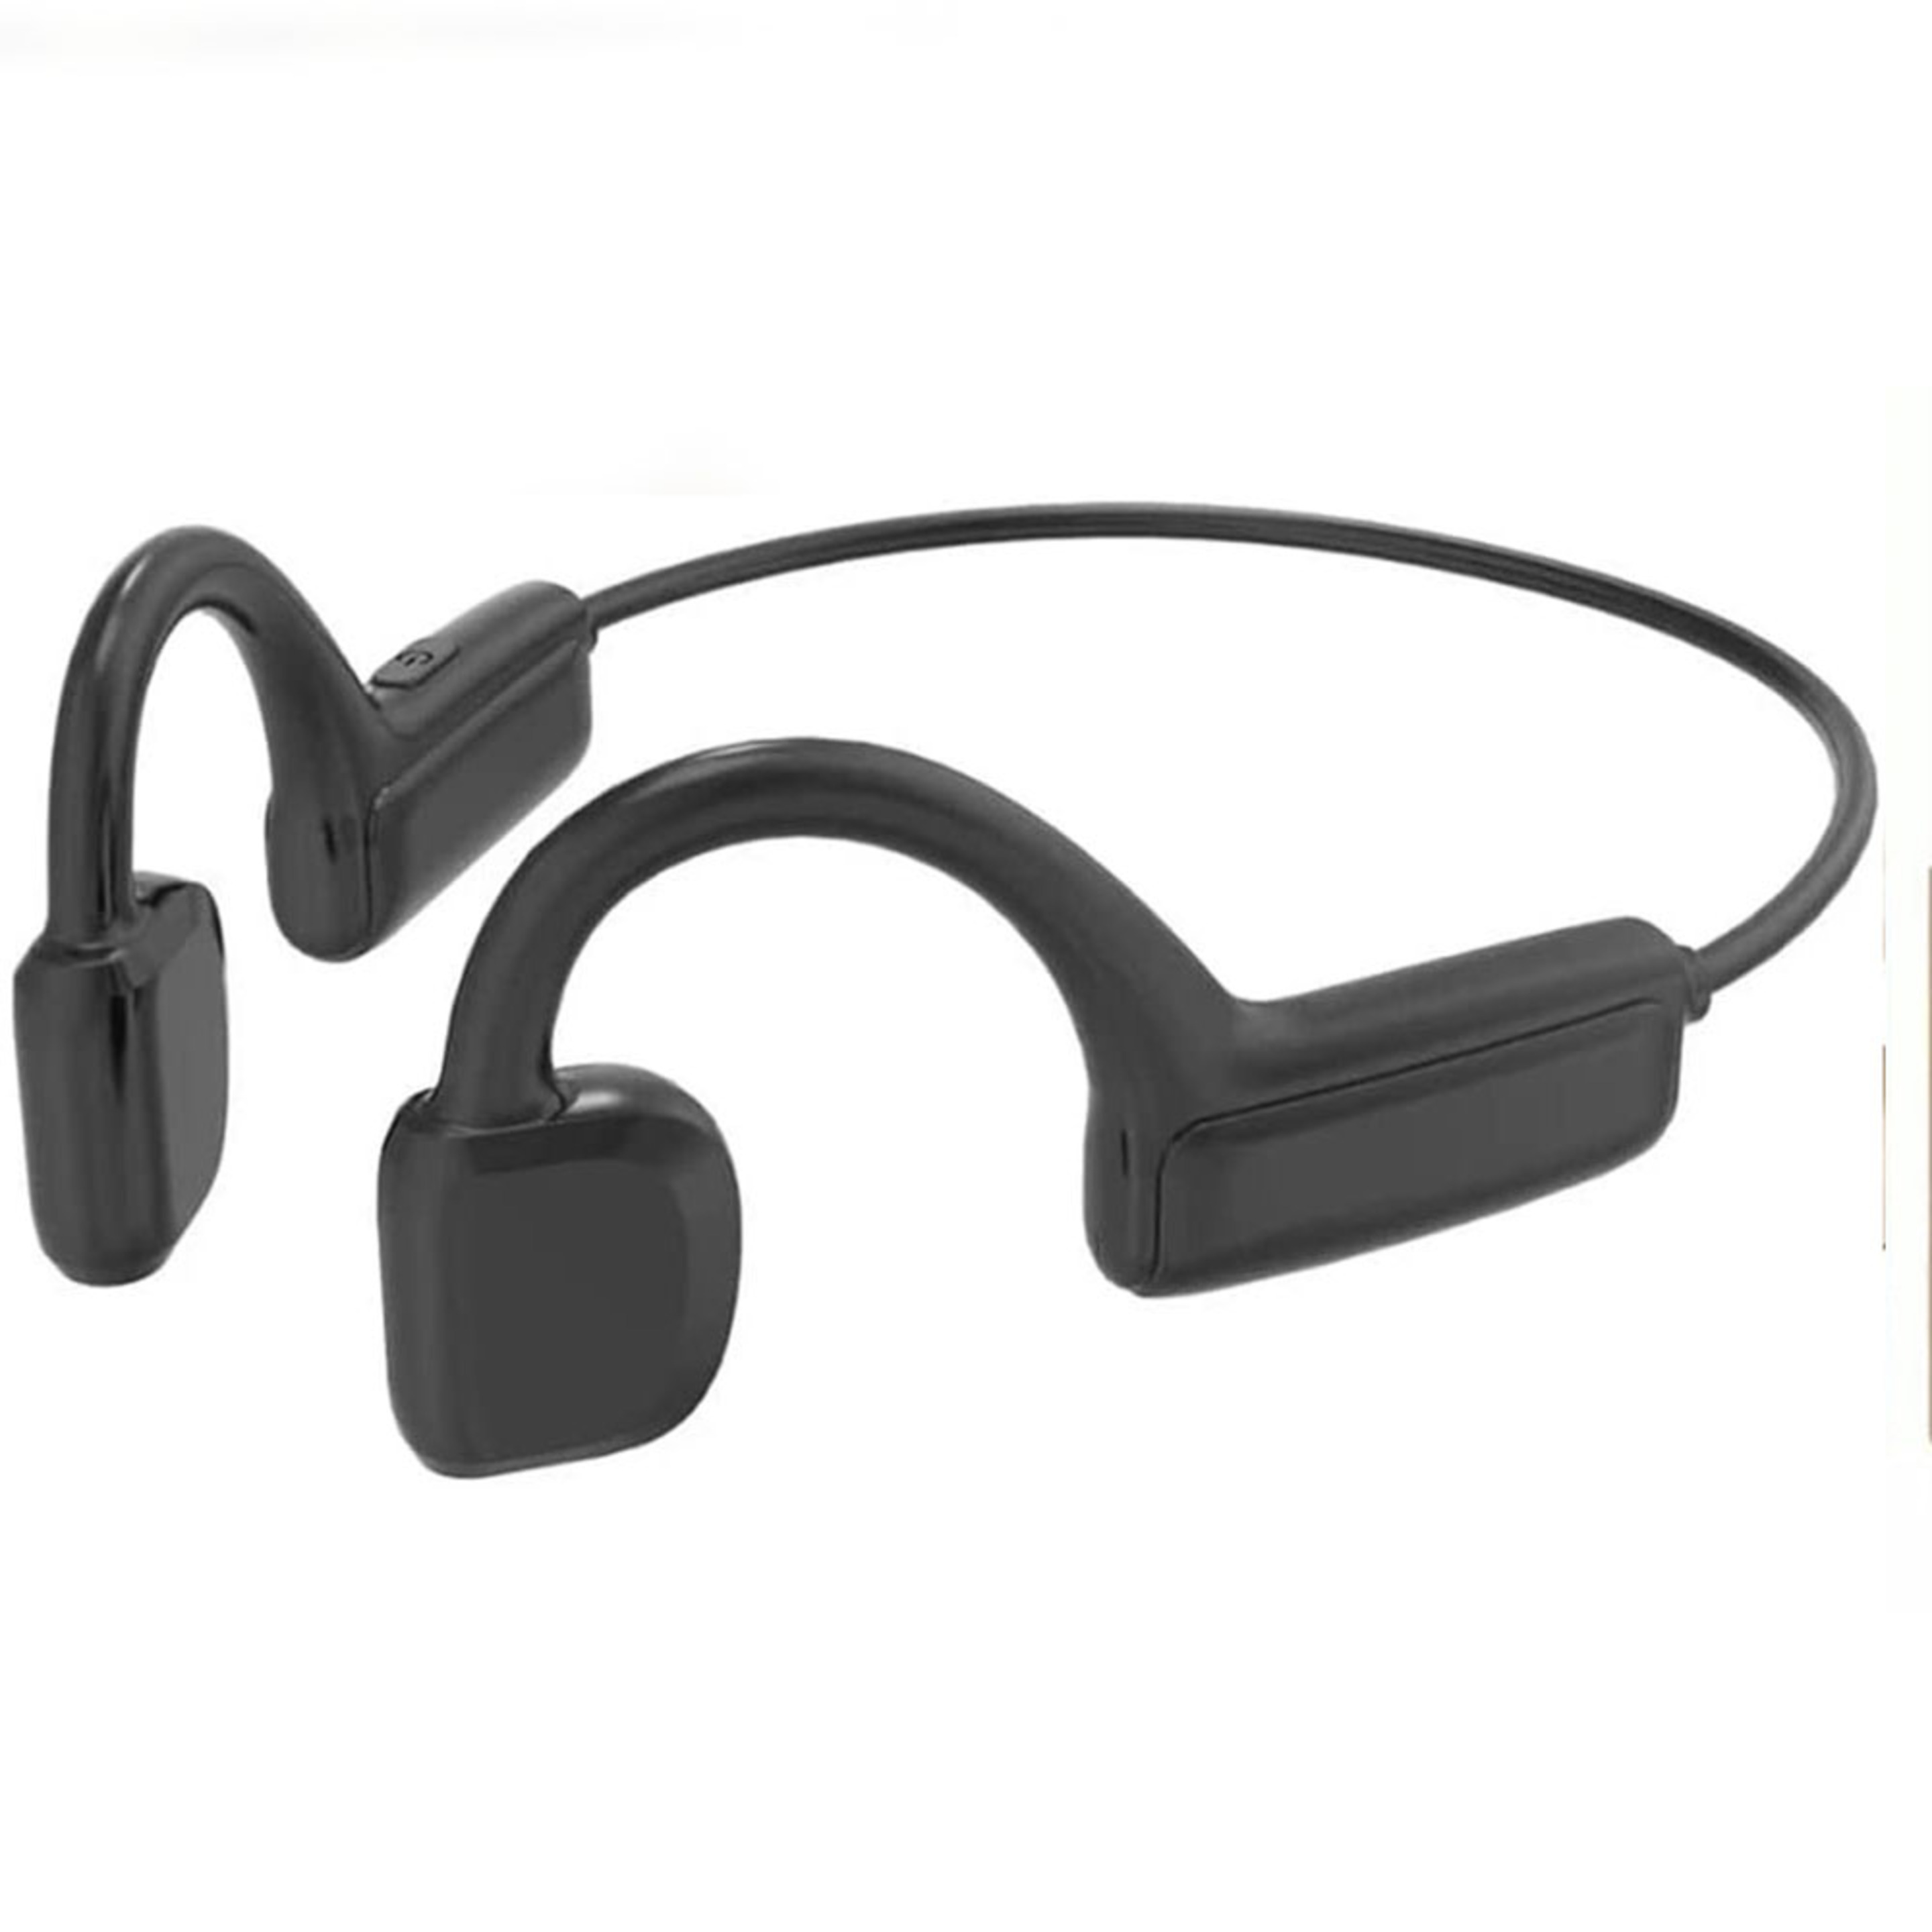 Auriculares Bluetooth 5,0 Inalambricos Klack - Negro - Transimision Osea Running  MKP